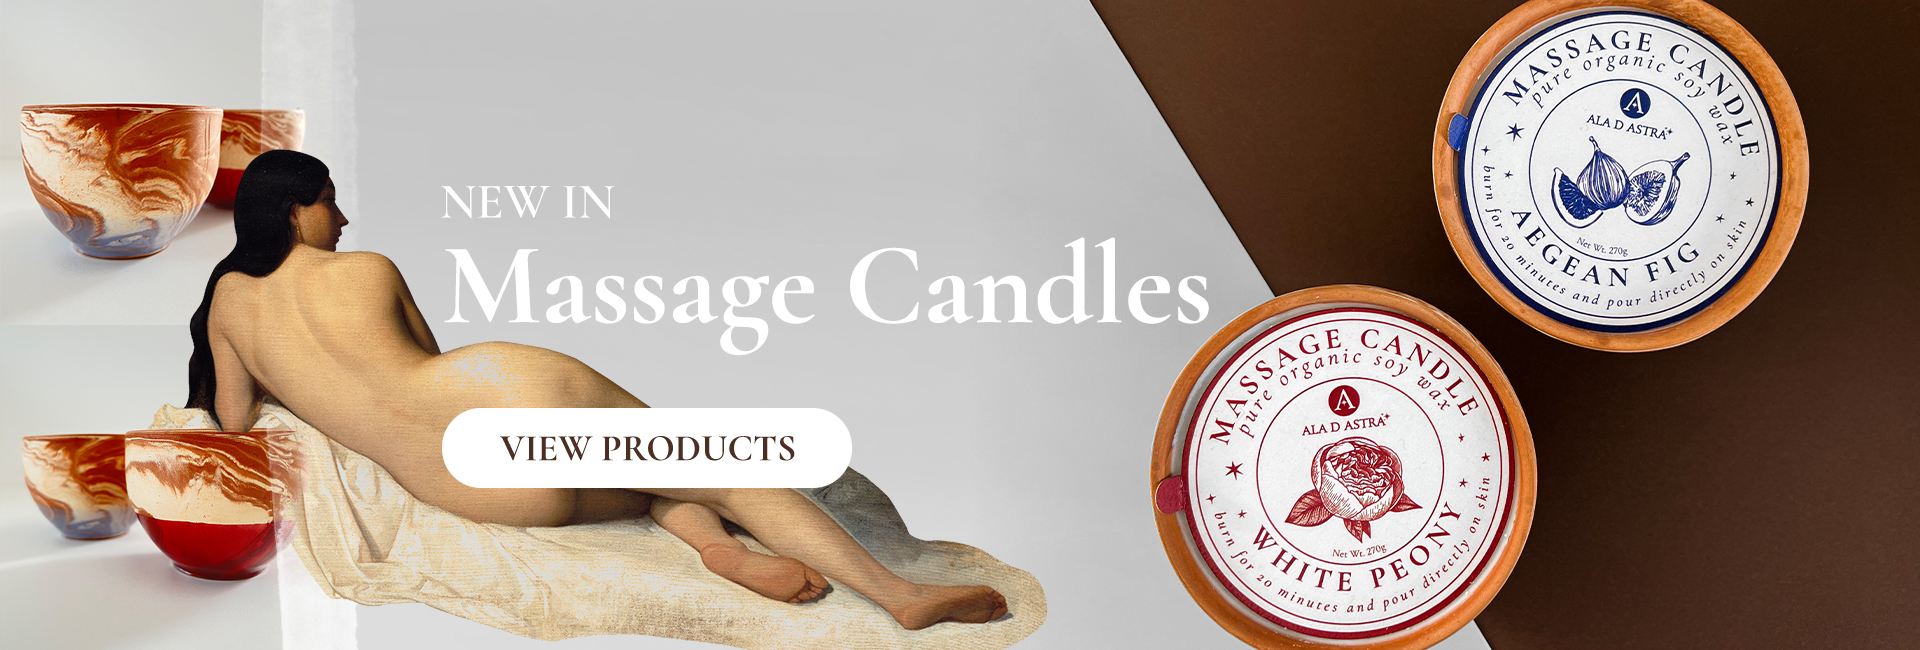 massage candles